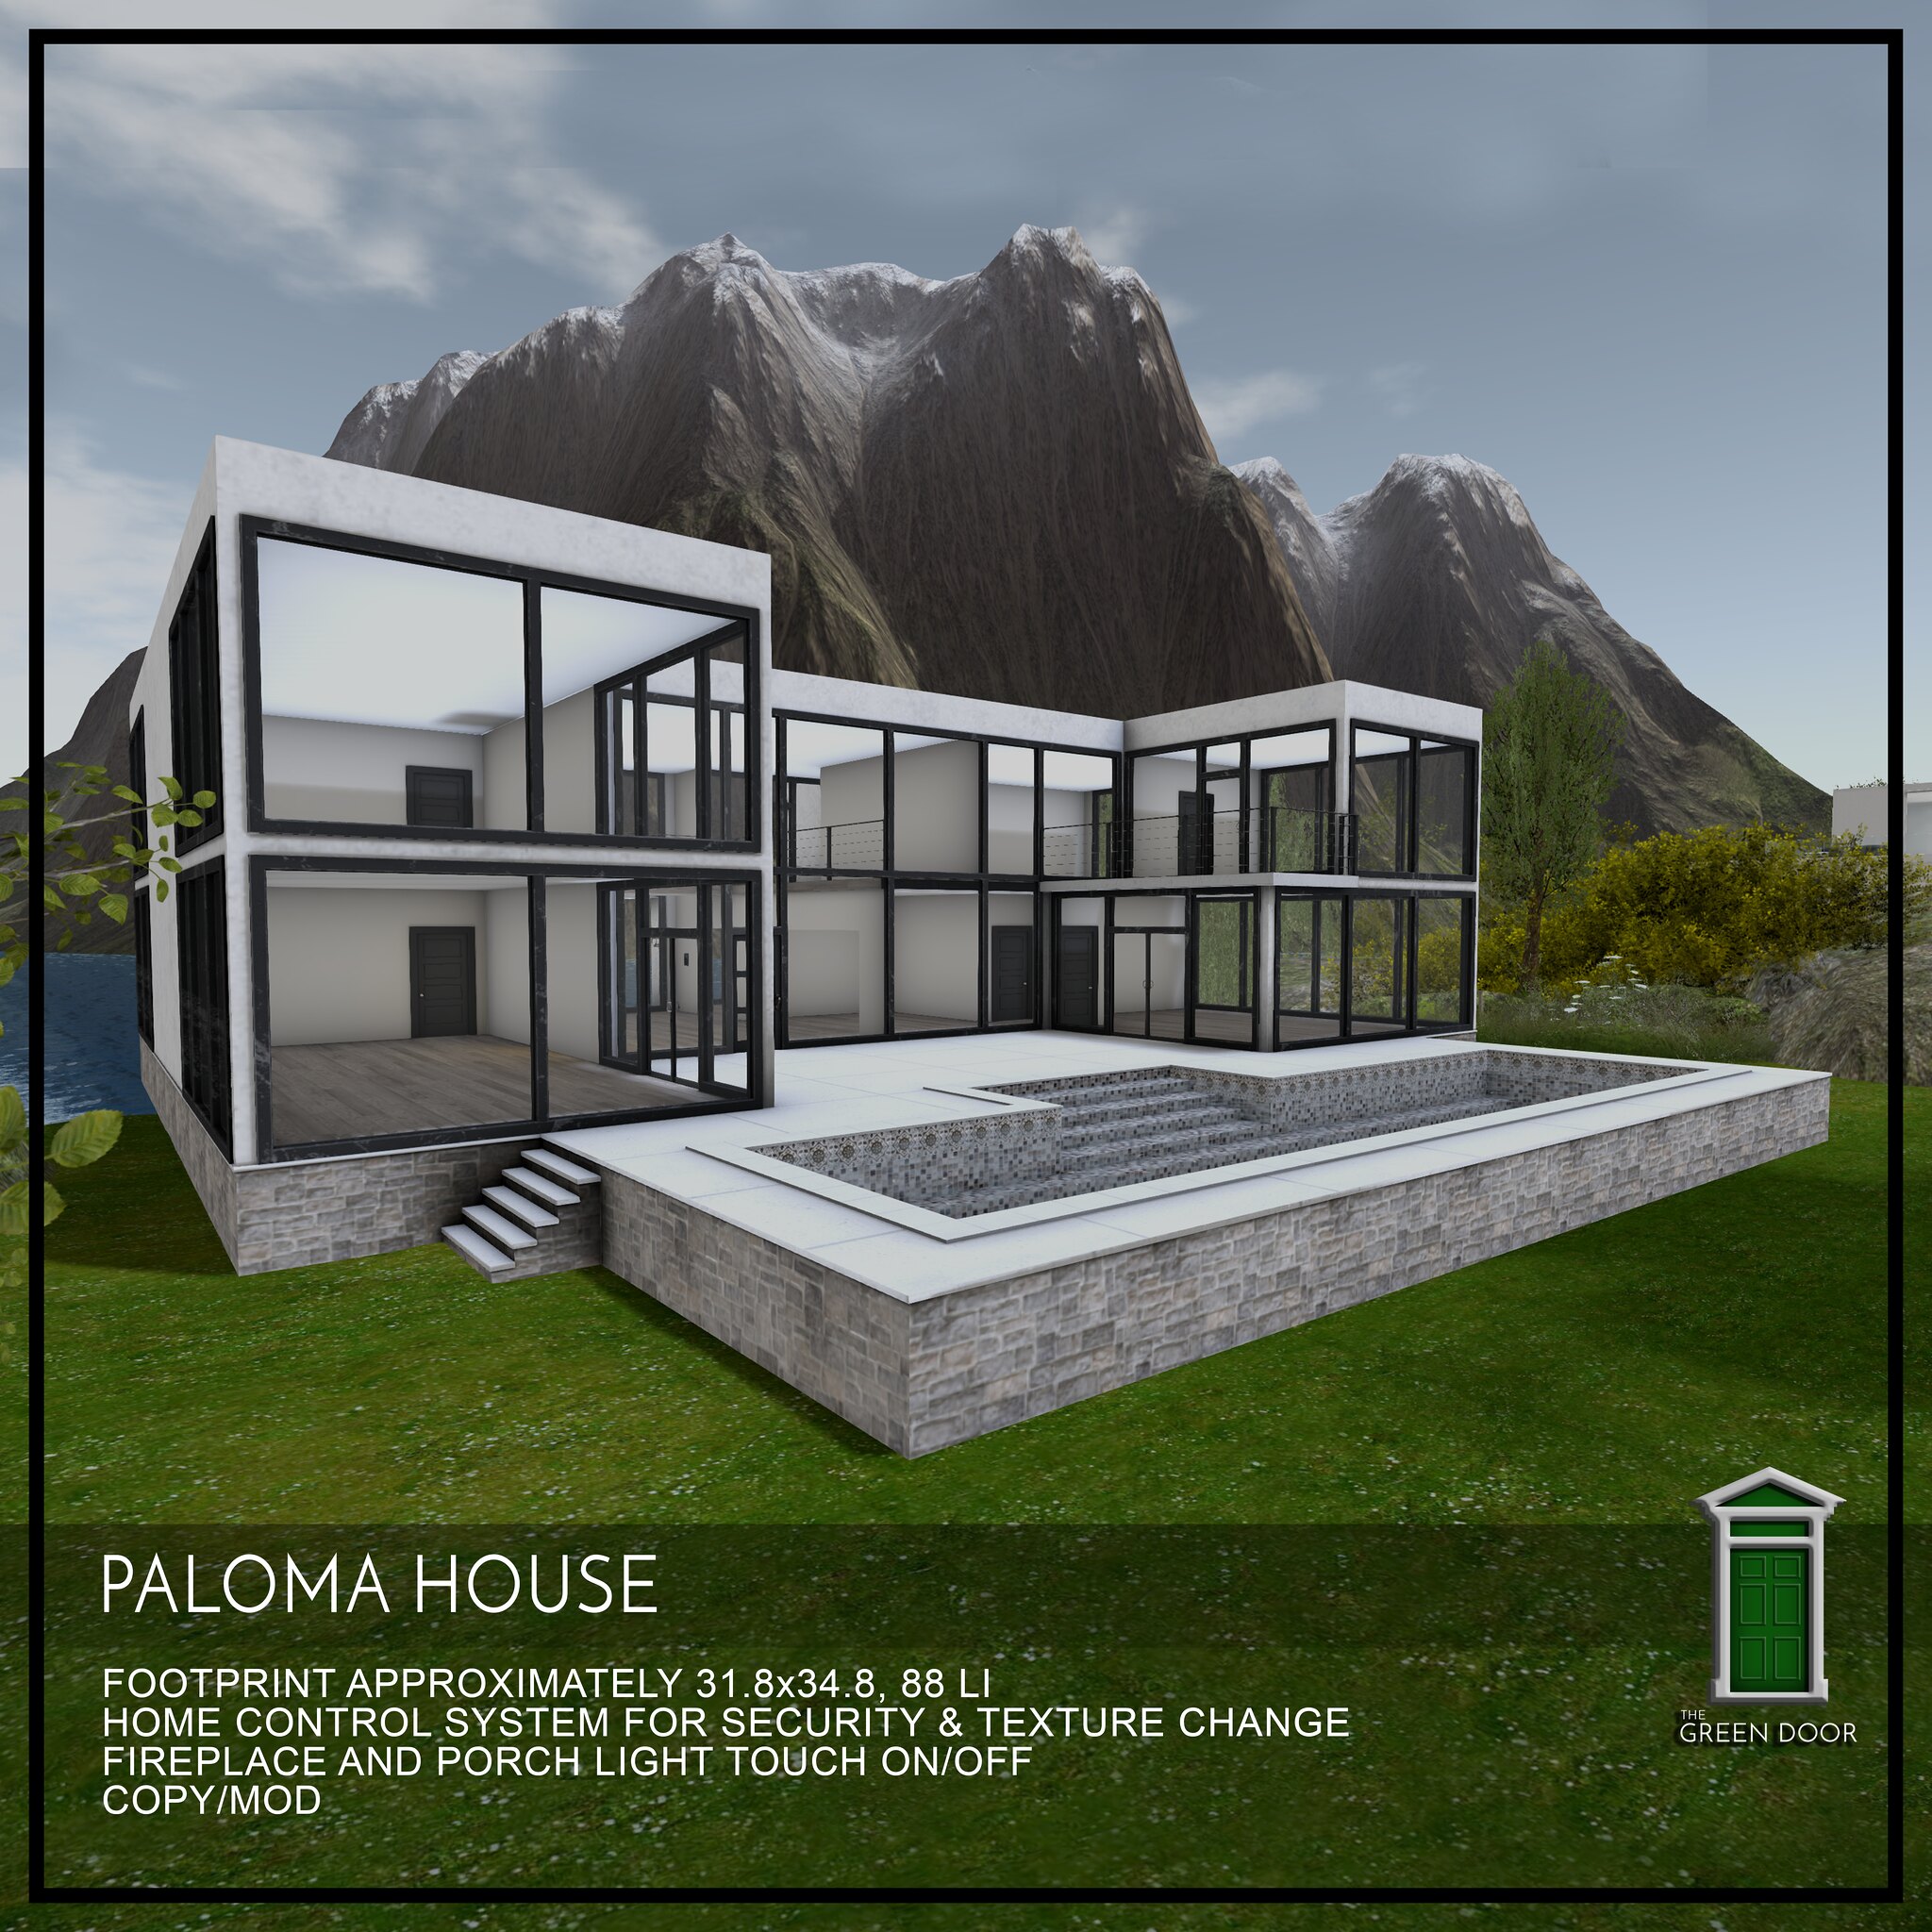 The Green Door – Paloma House